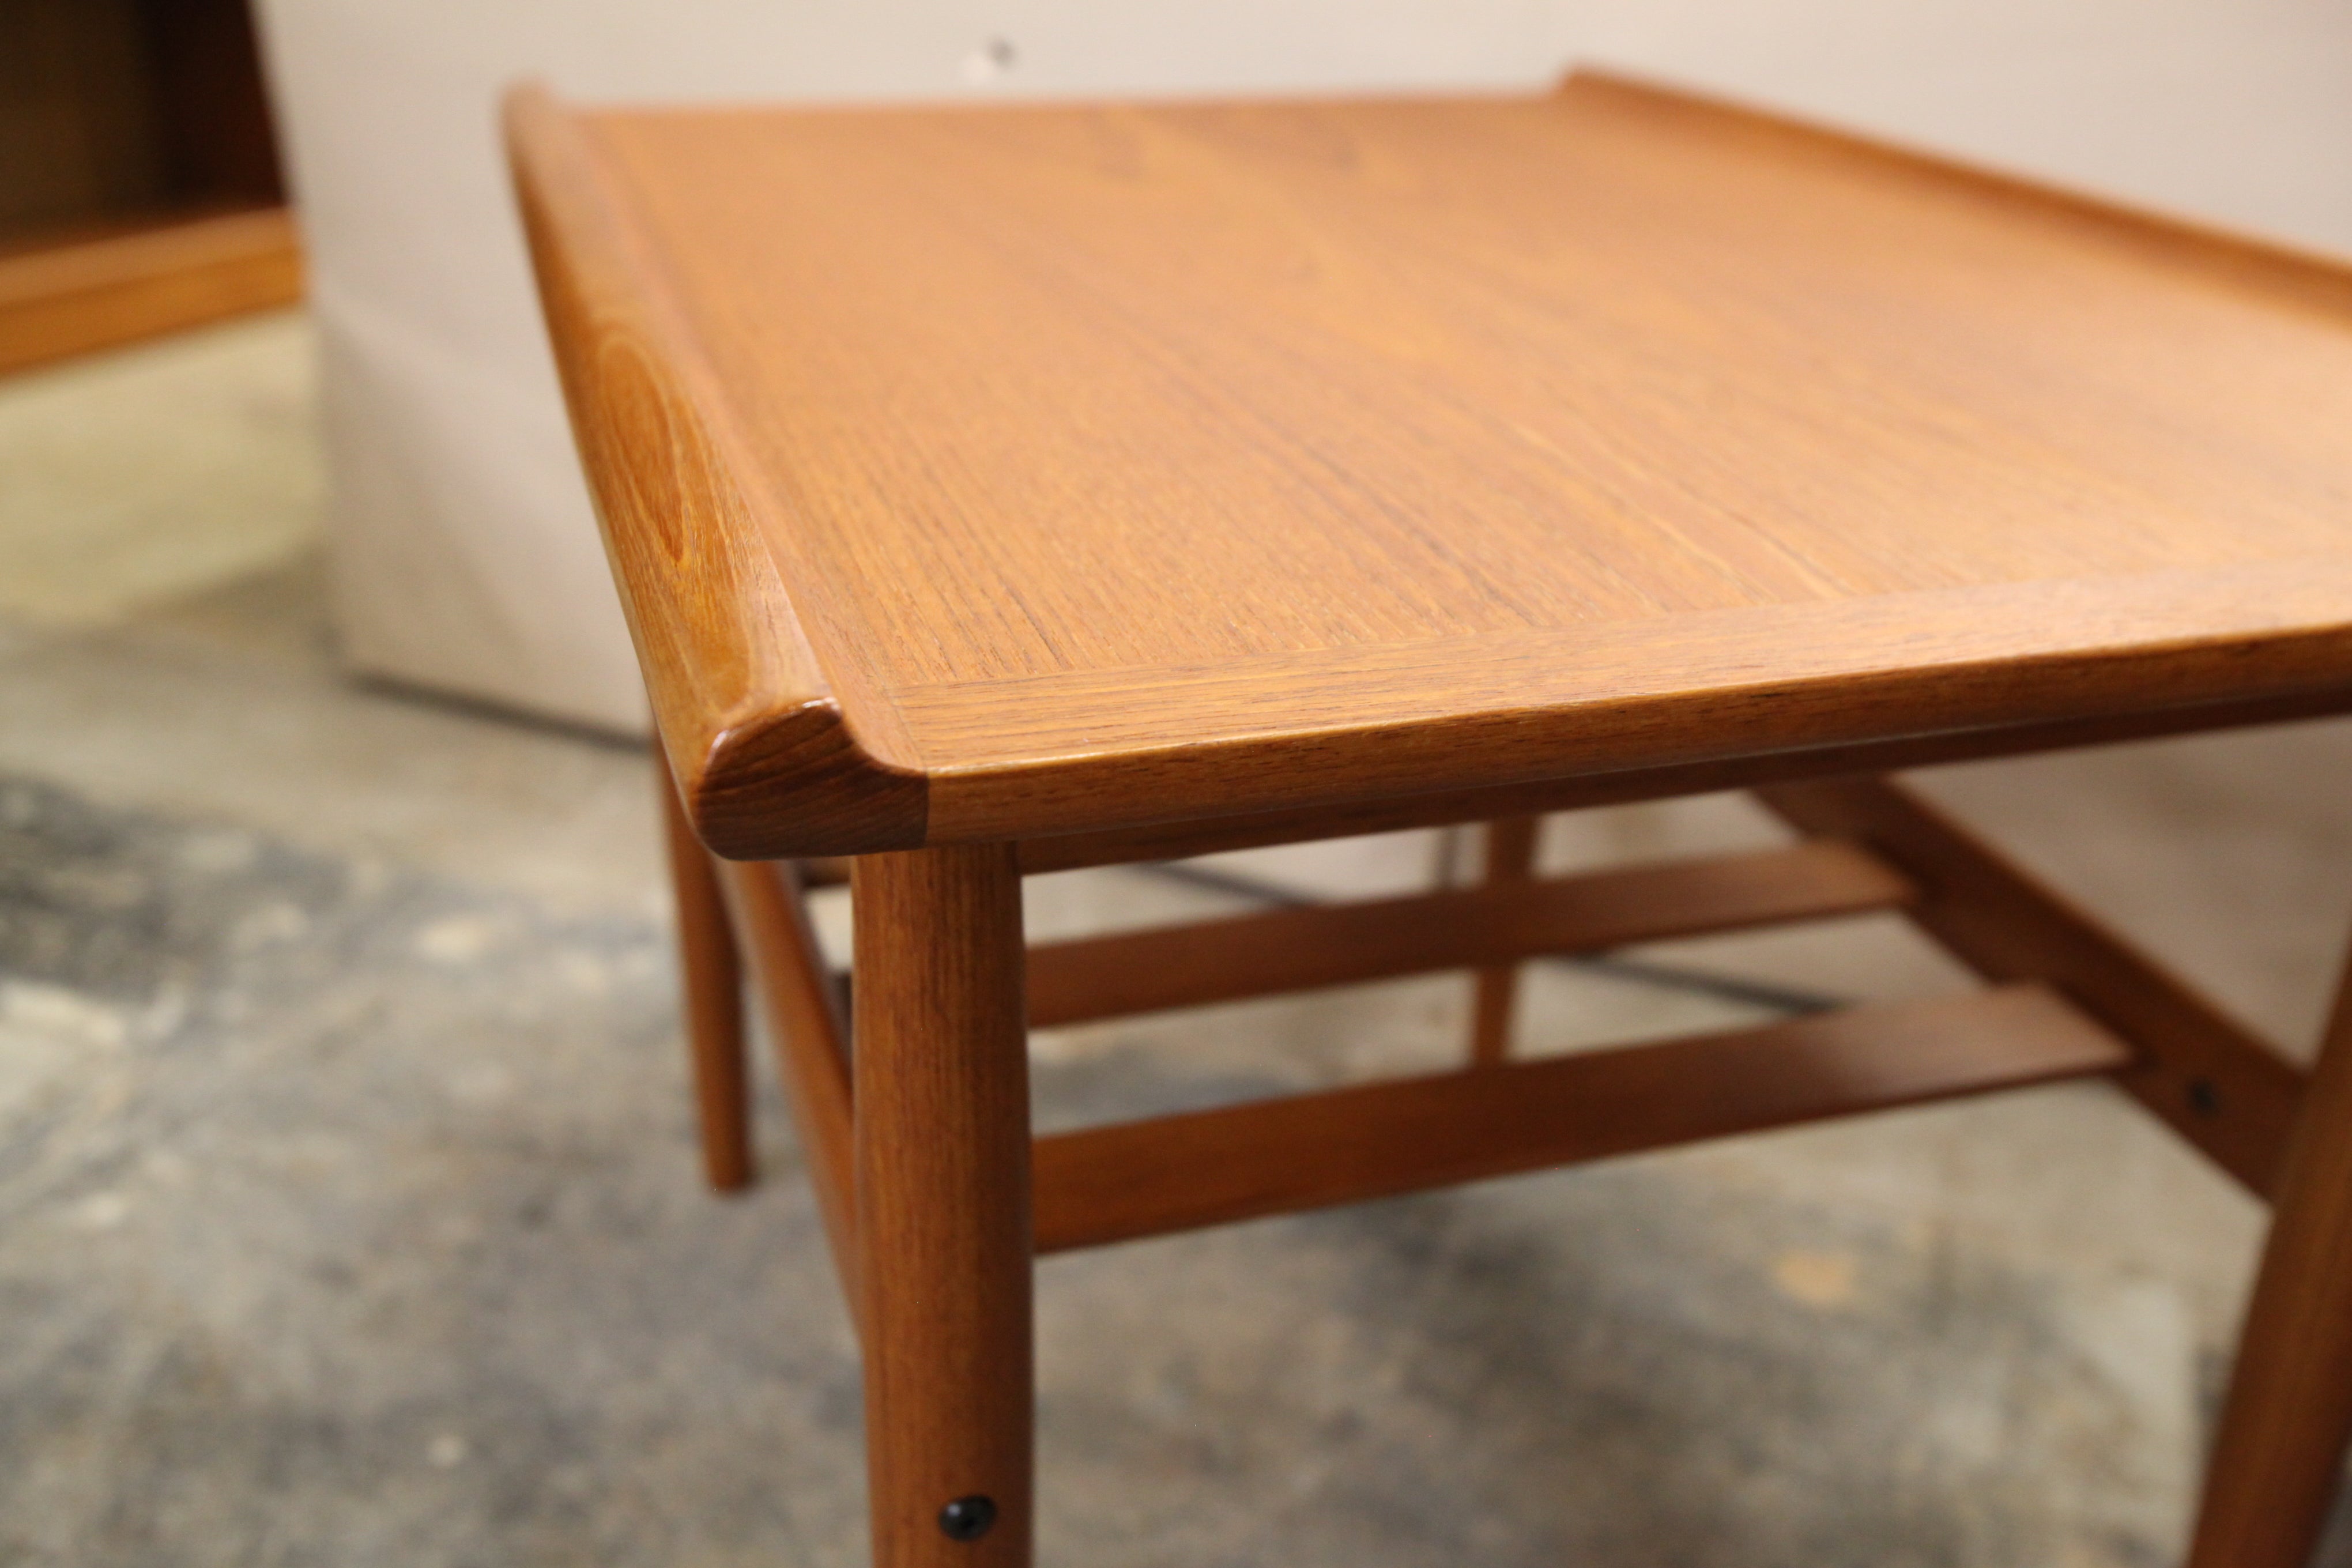 The Perfect Vintage Danish Teak Side Table (26.5" x 20" x 19.25"H)